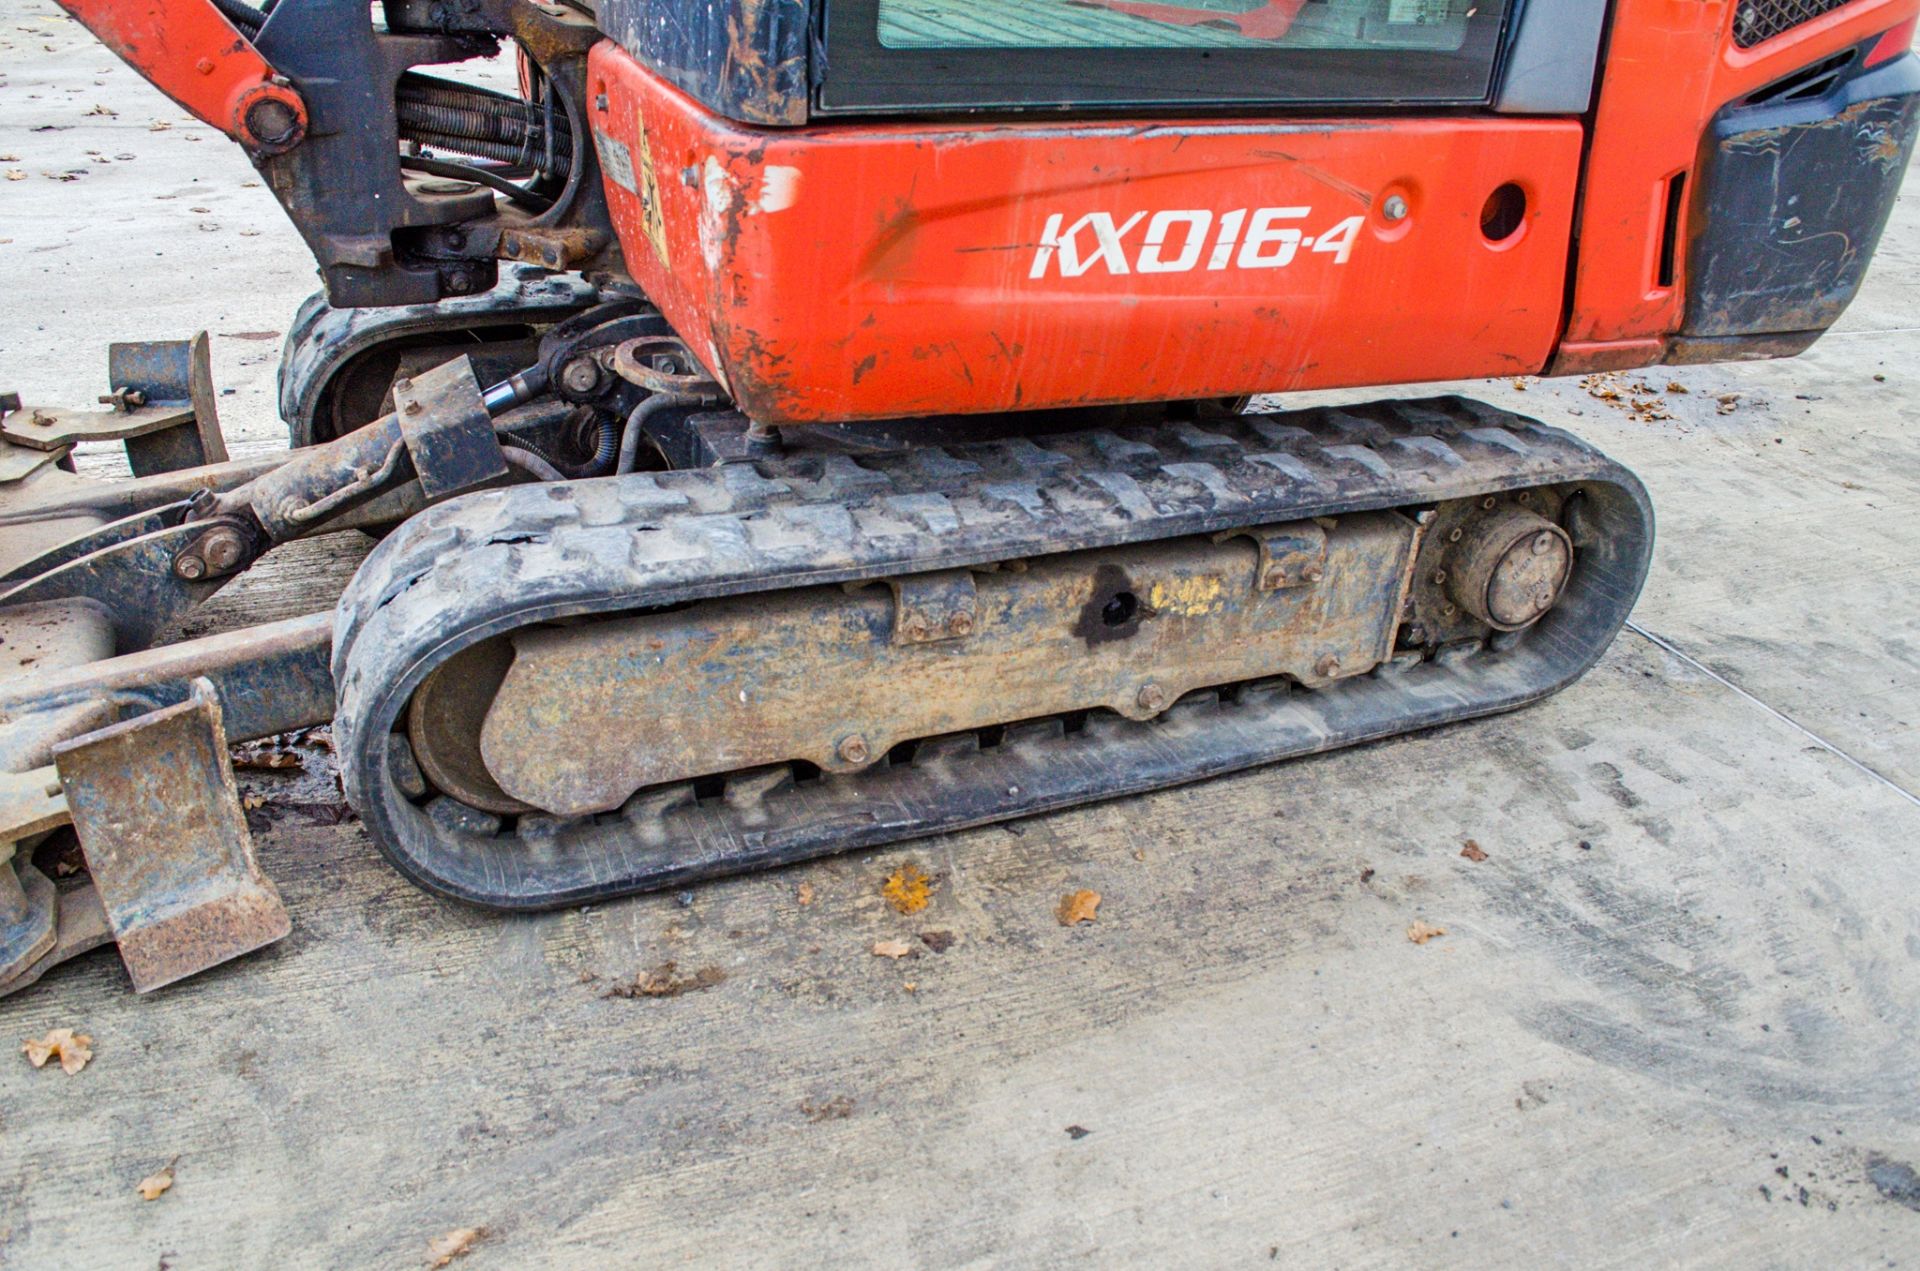 Kubota KX016-4 1.6 tonne rubber tracked mini excavator Year: 2014 S/N: 577998 Recorded Hours: 2026 - Image 9 of 18